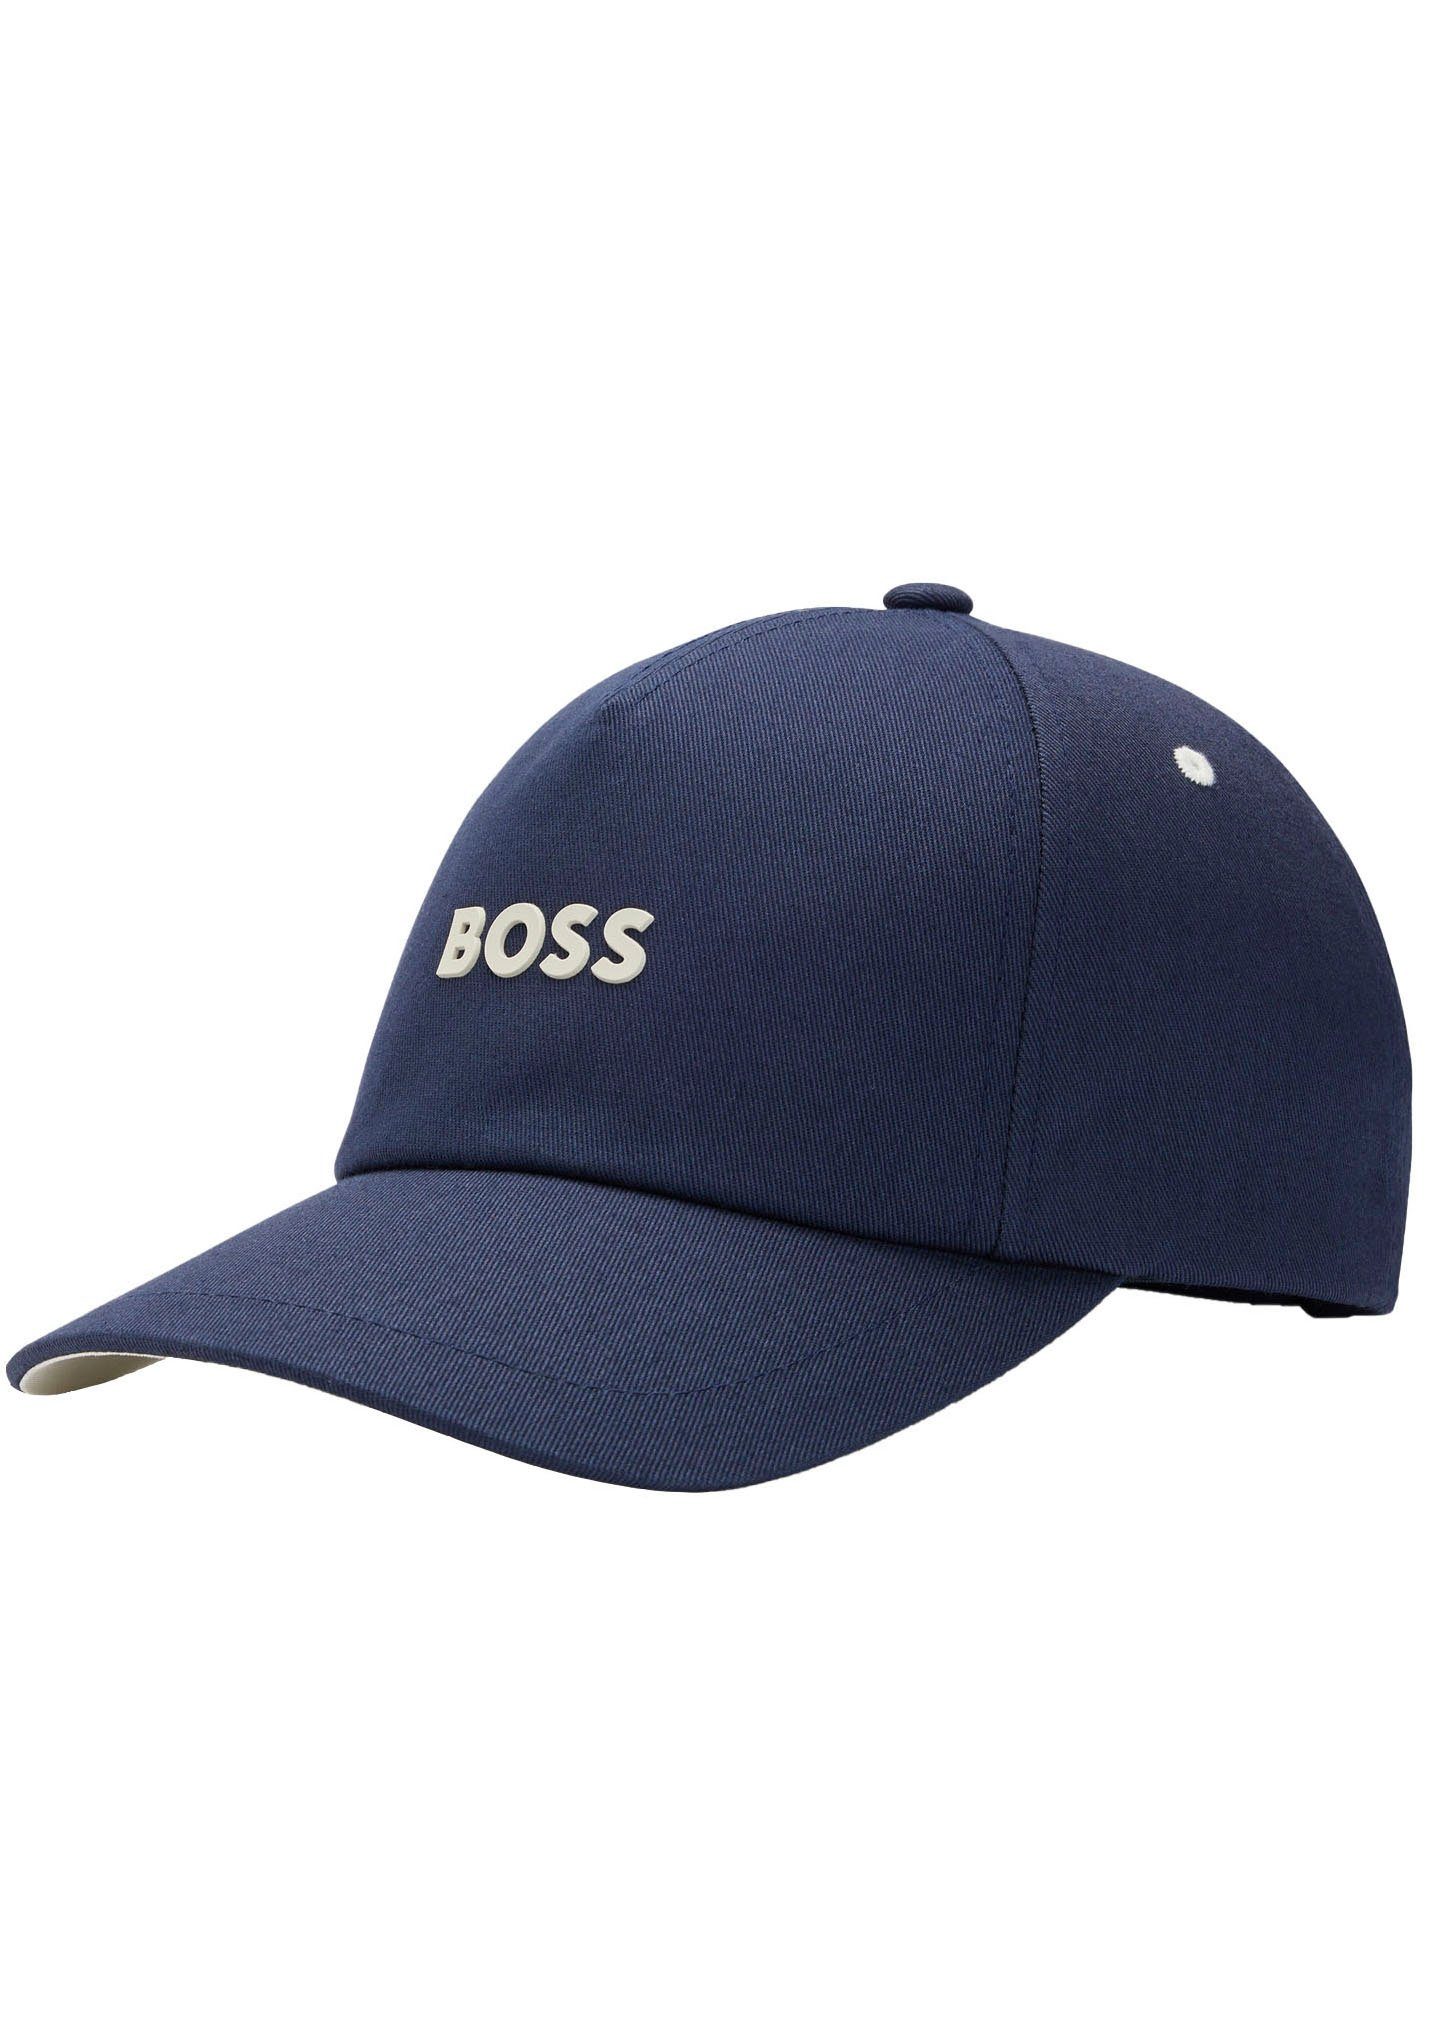 Fresco-3 mit Cap BOSS Baseball Klettverschluss dark-Blue ORANGE